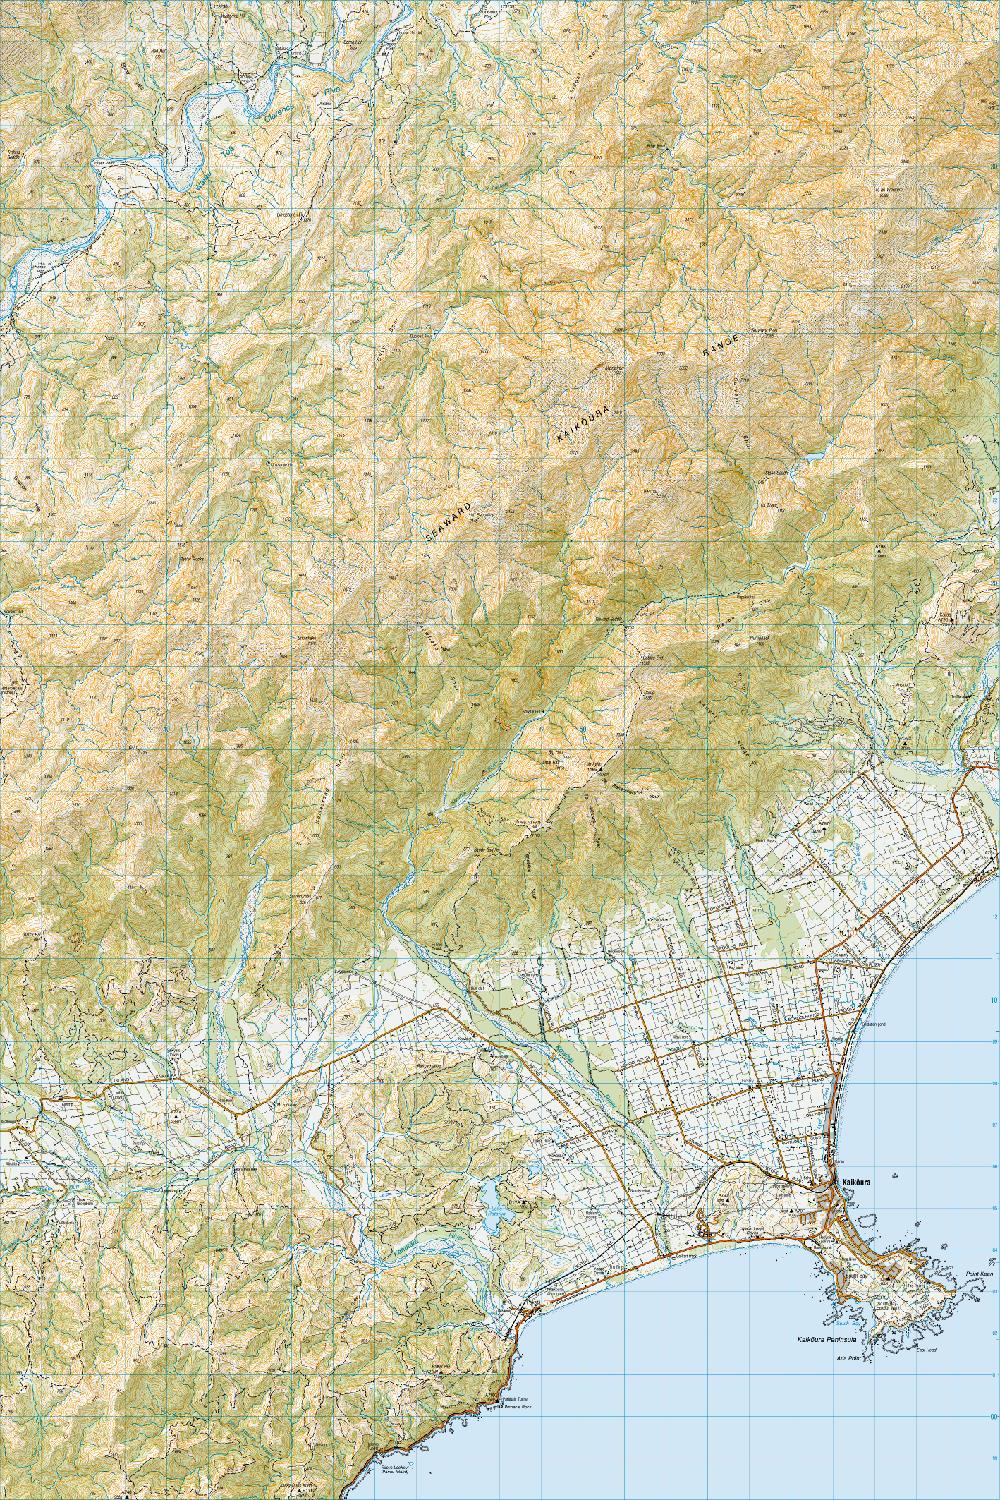 Topo map of Kaikōura